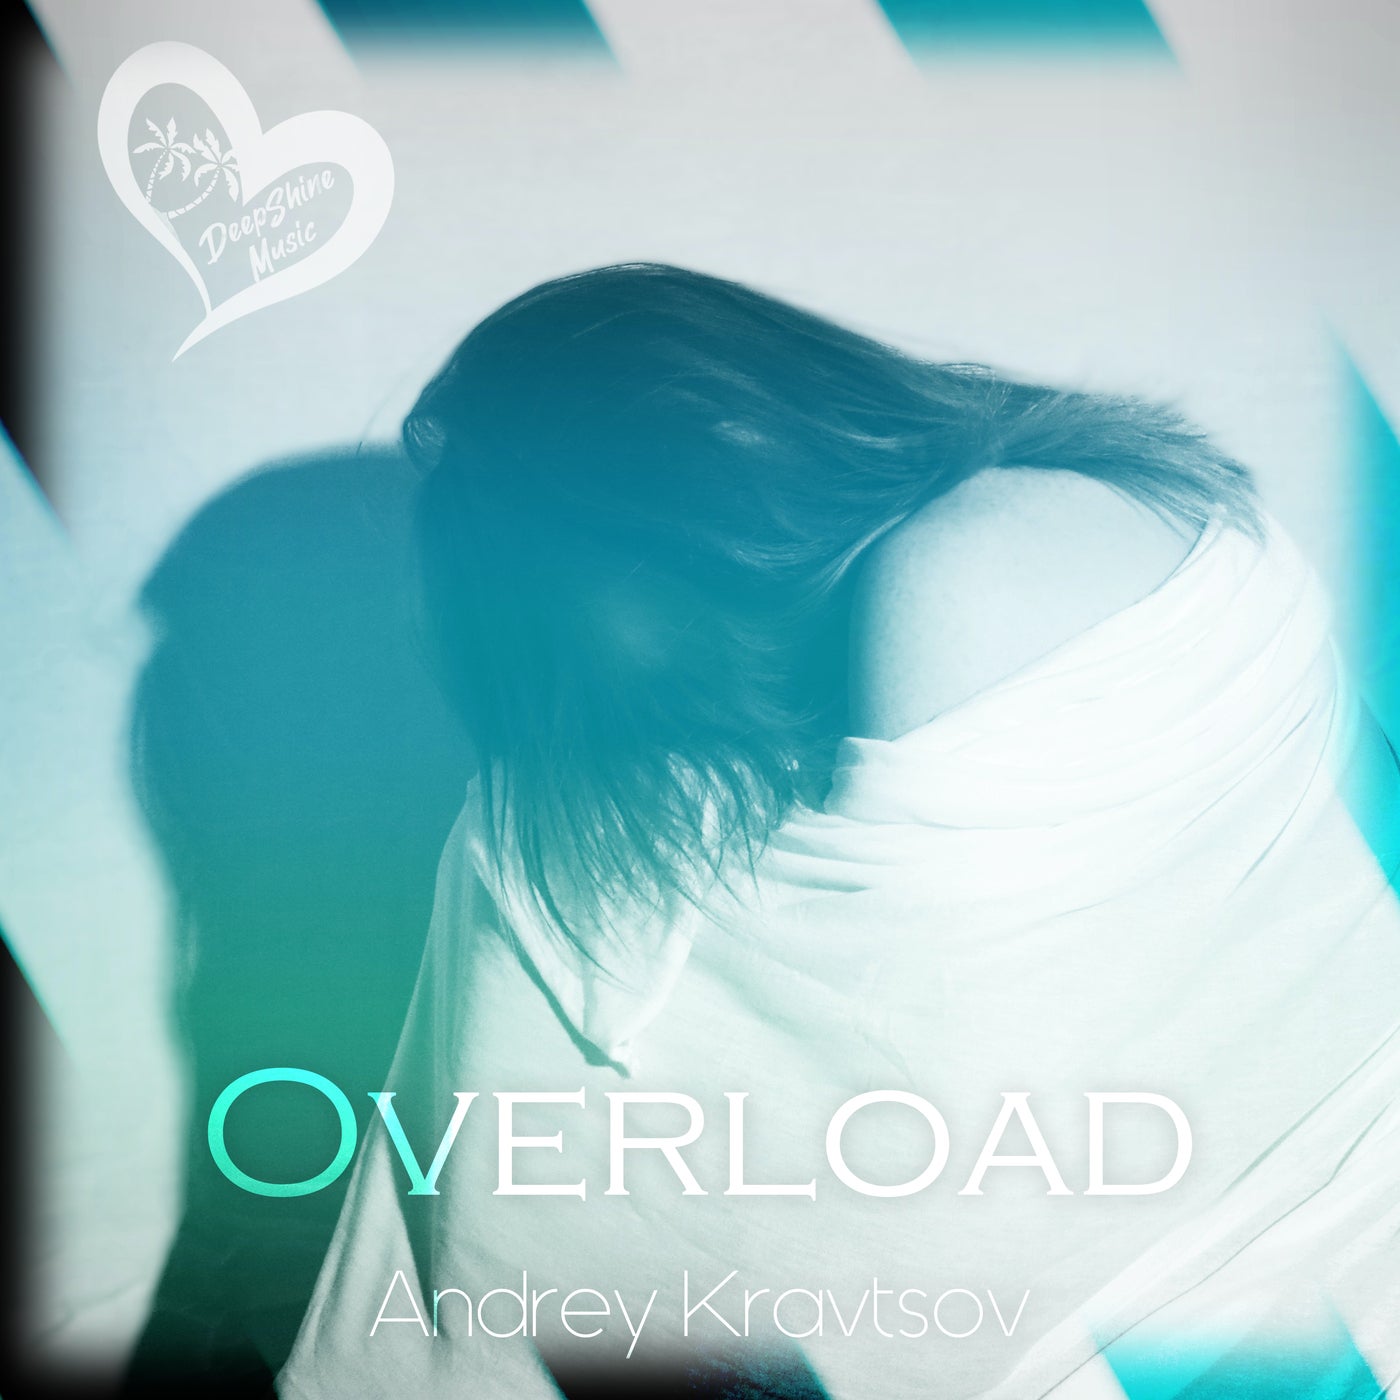 Andrey Kravtsov - Overload [DeepShine Music]